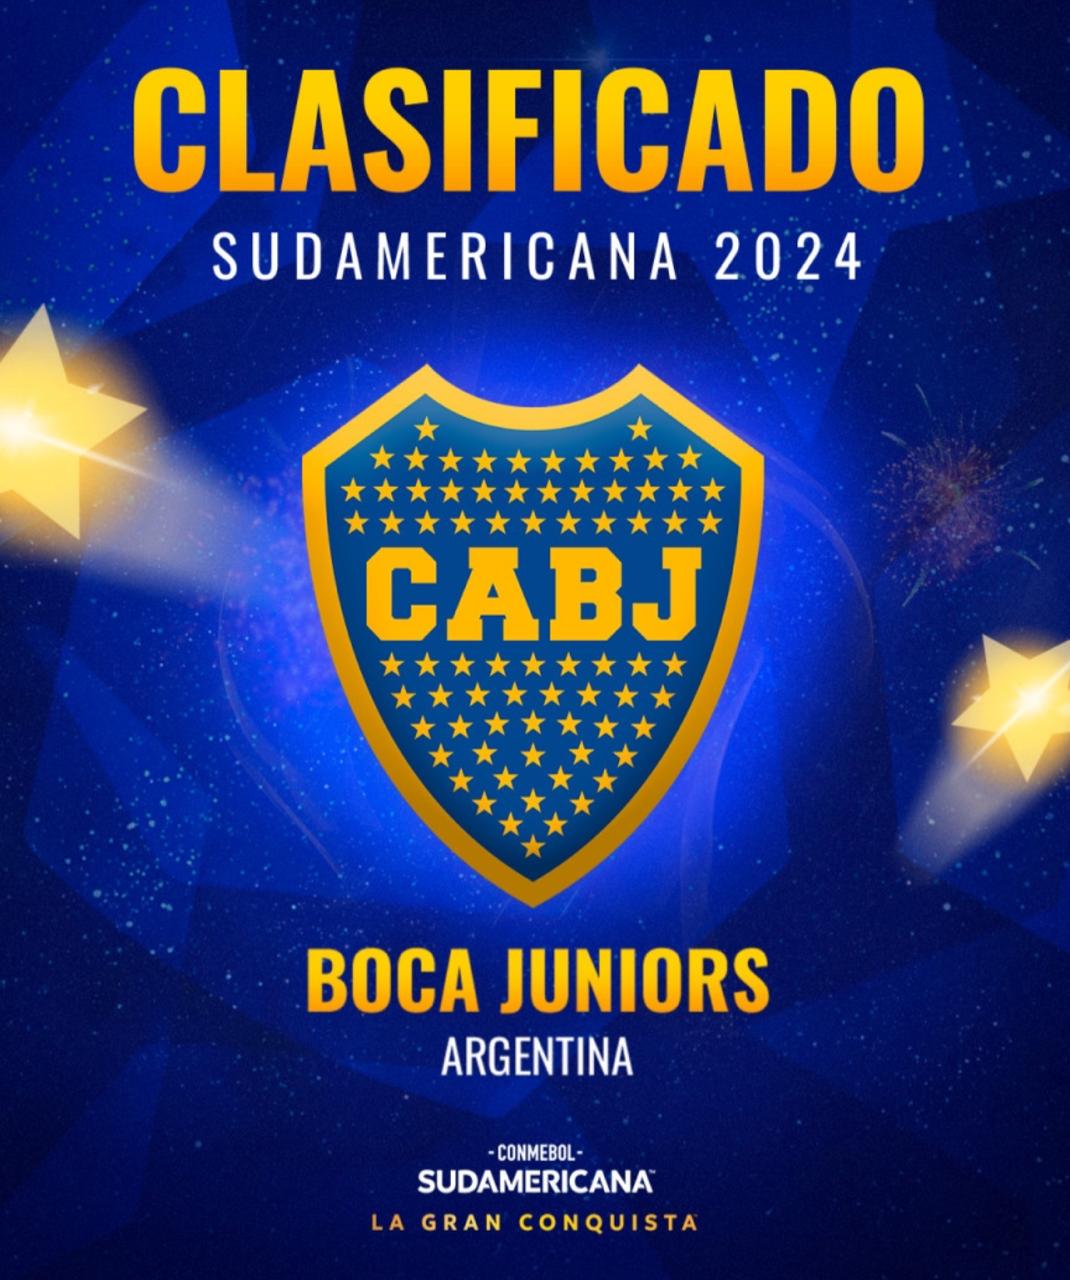 Boca Juniors se queda fuera de la próxima edición de la Copa Libertadores